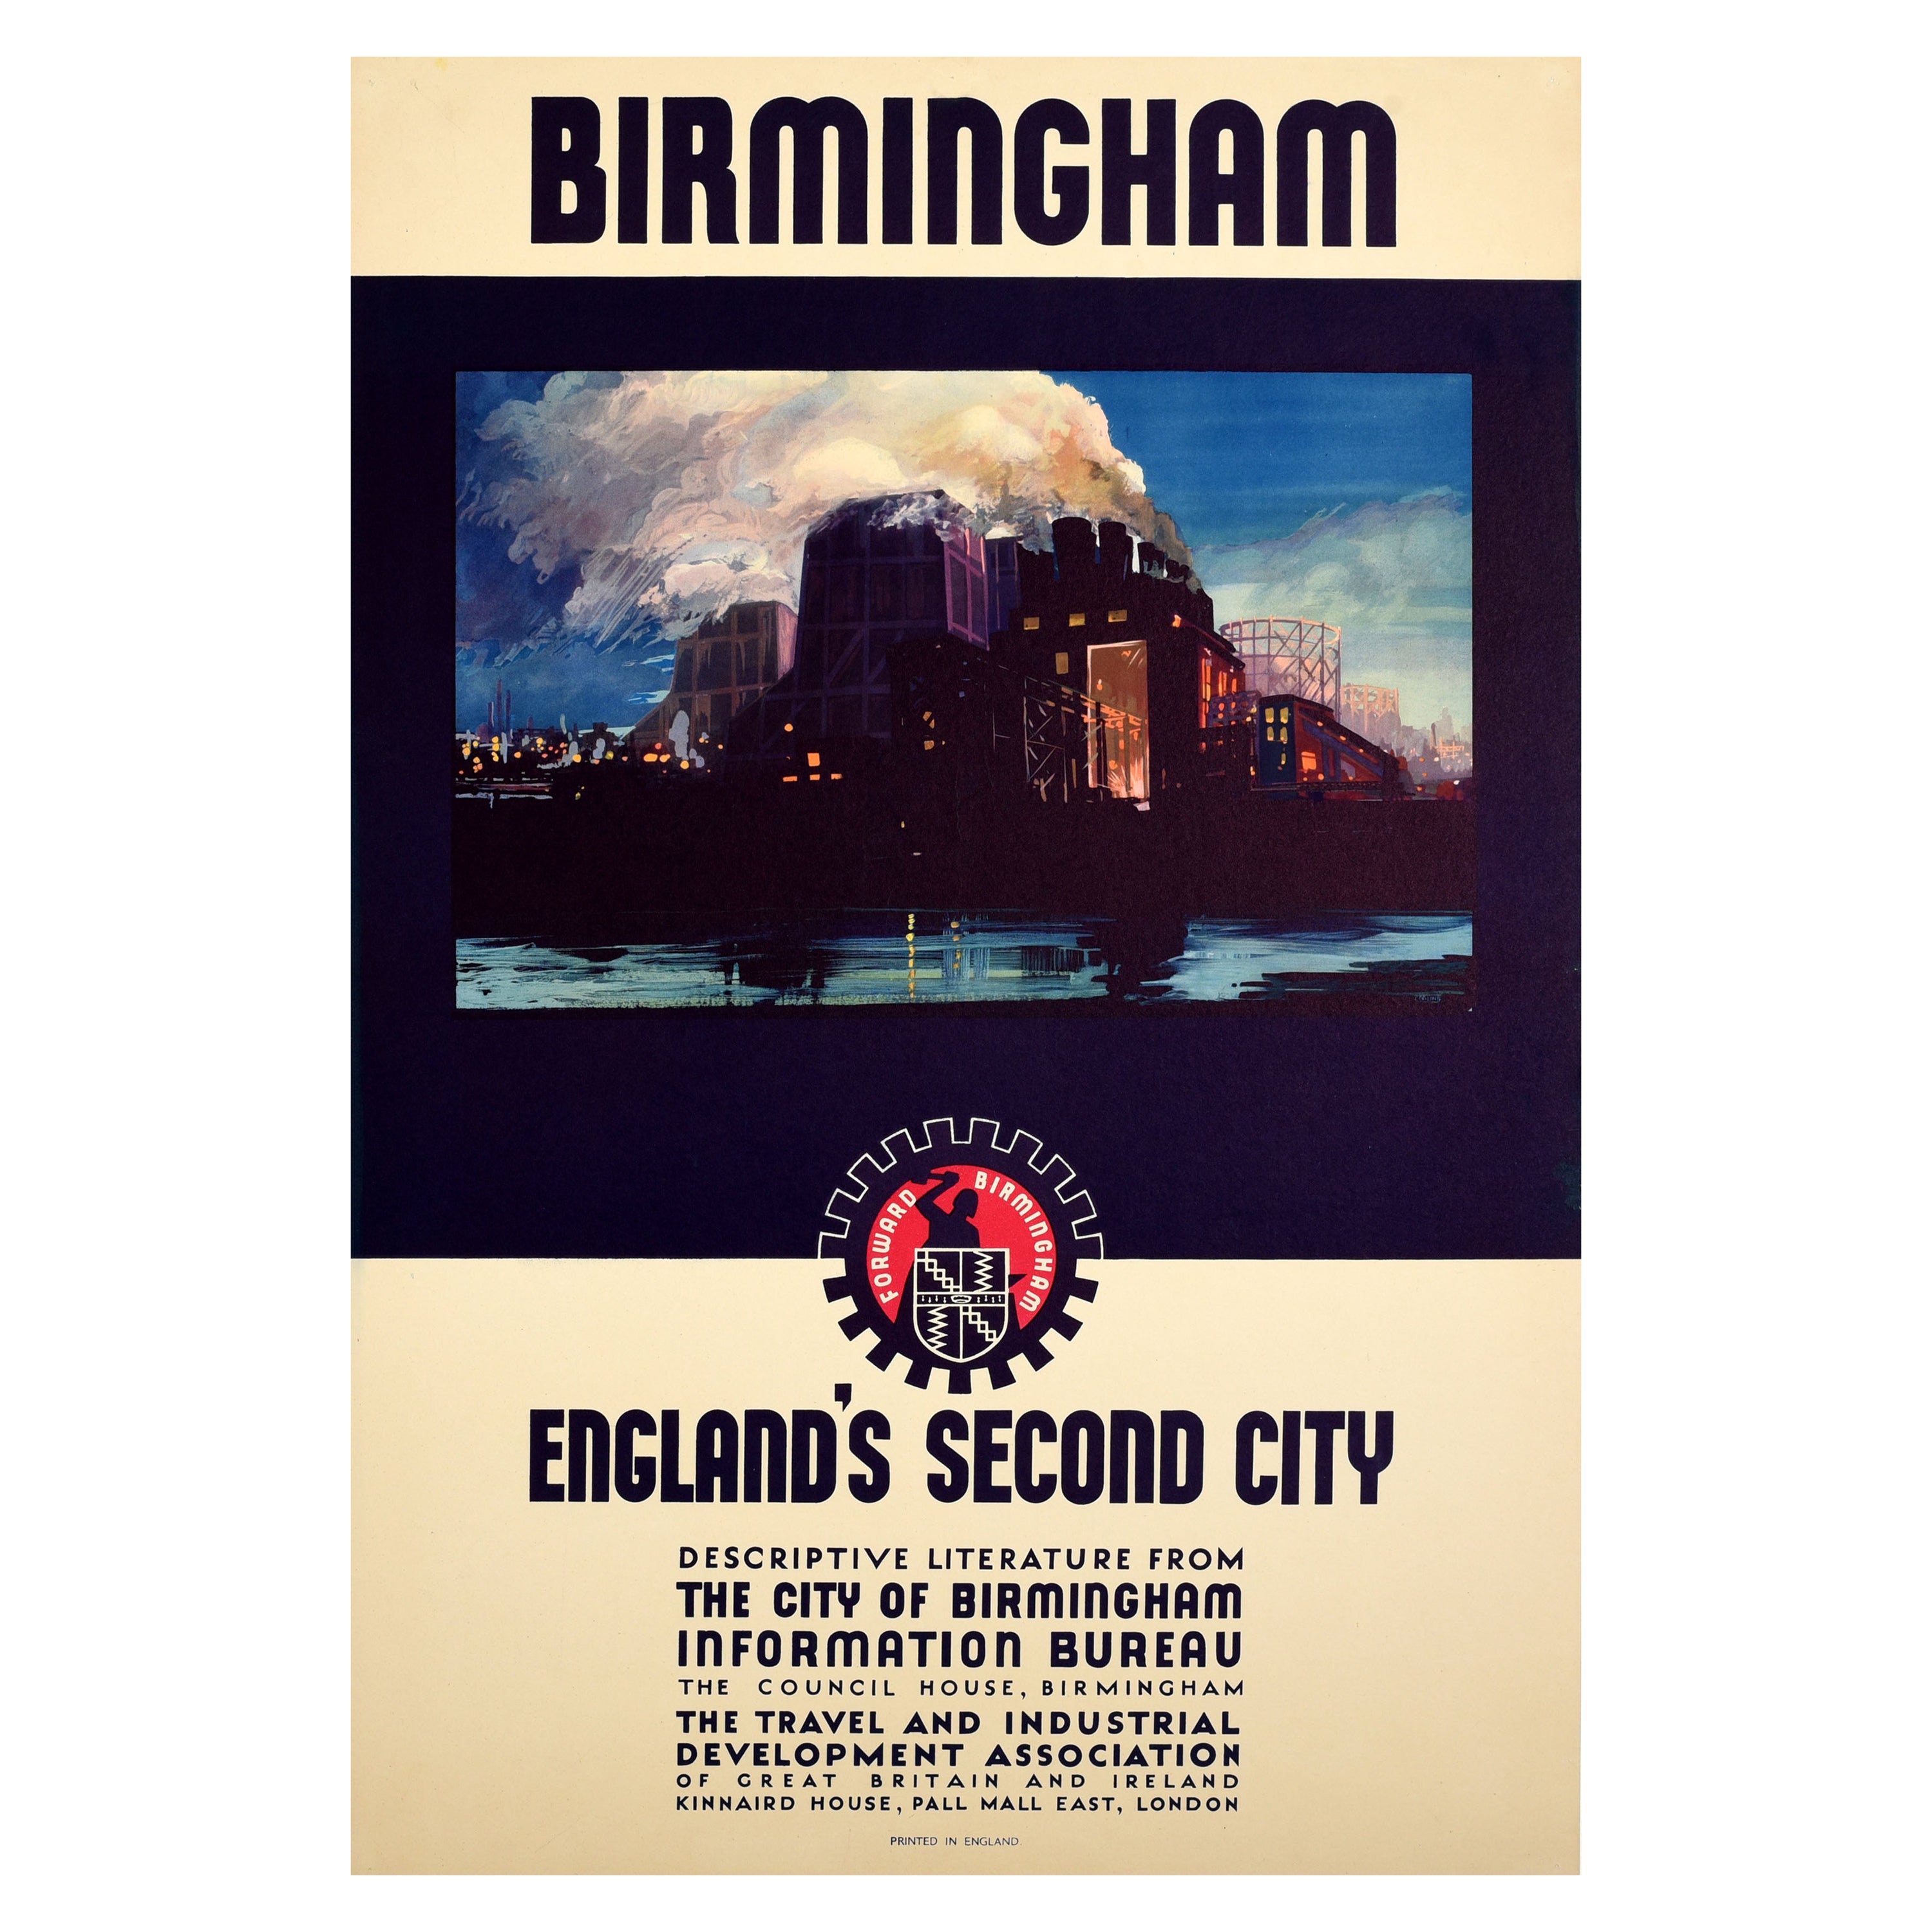 Original Vintage Travel Poster Birmingham England Second City Art Deco Industry For Sale